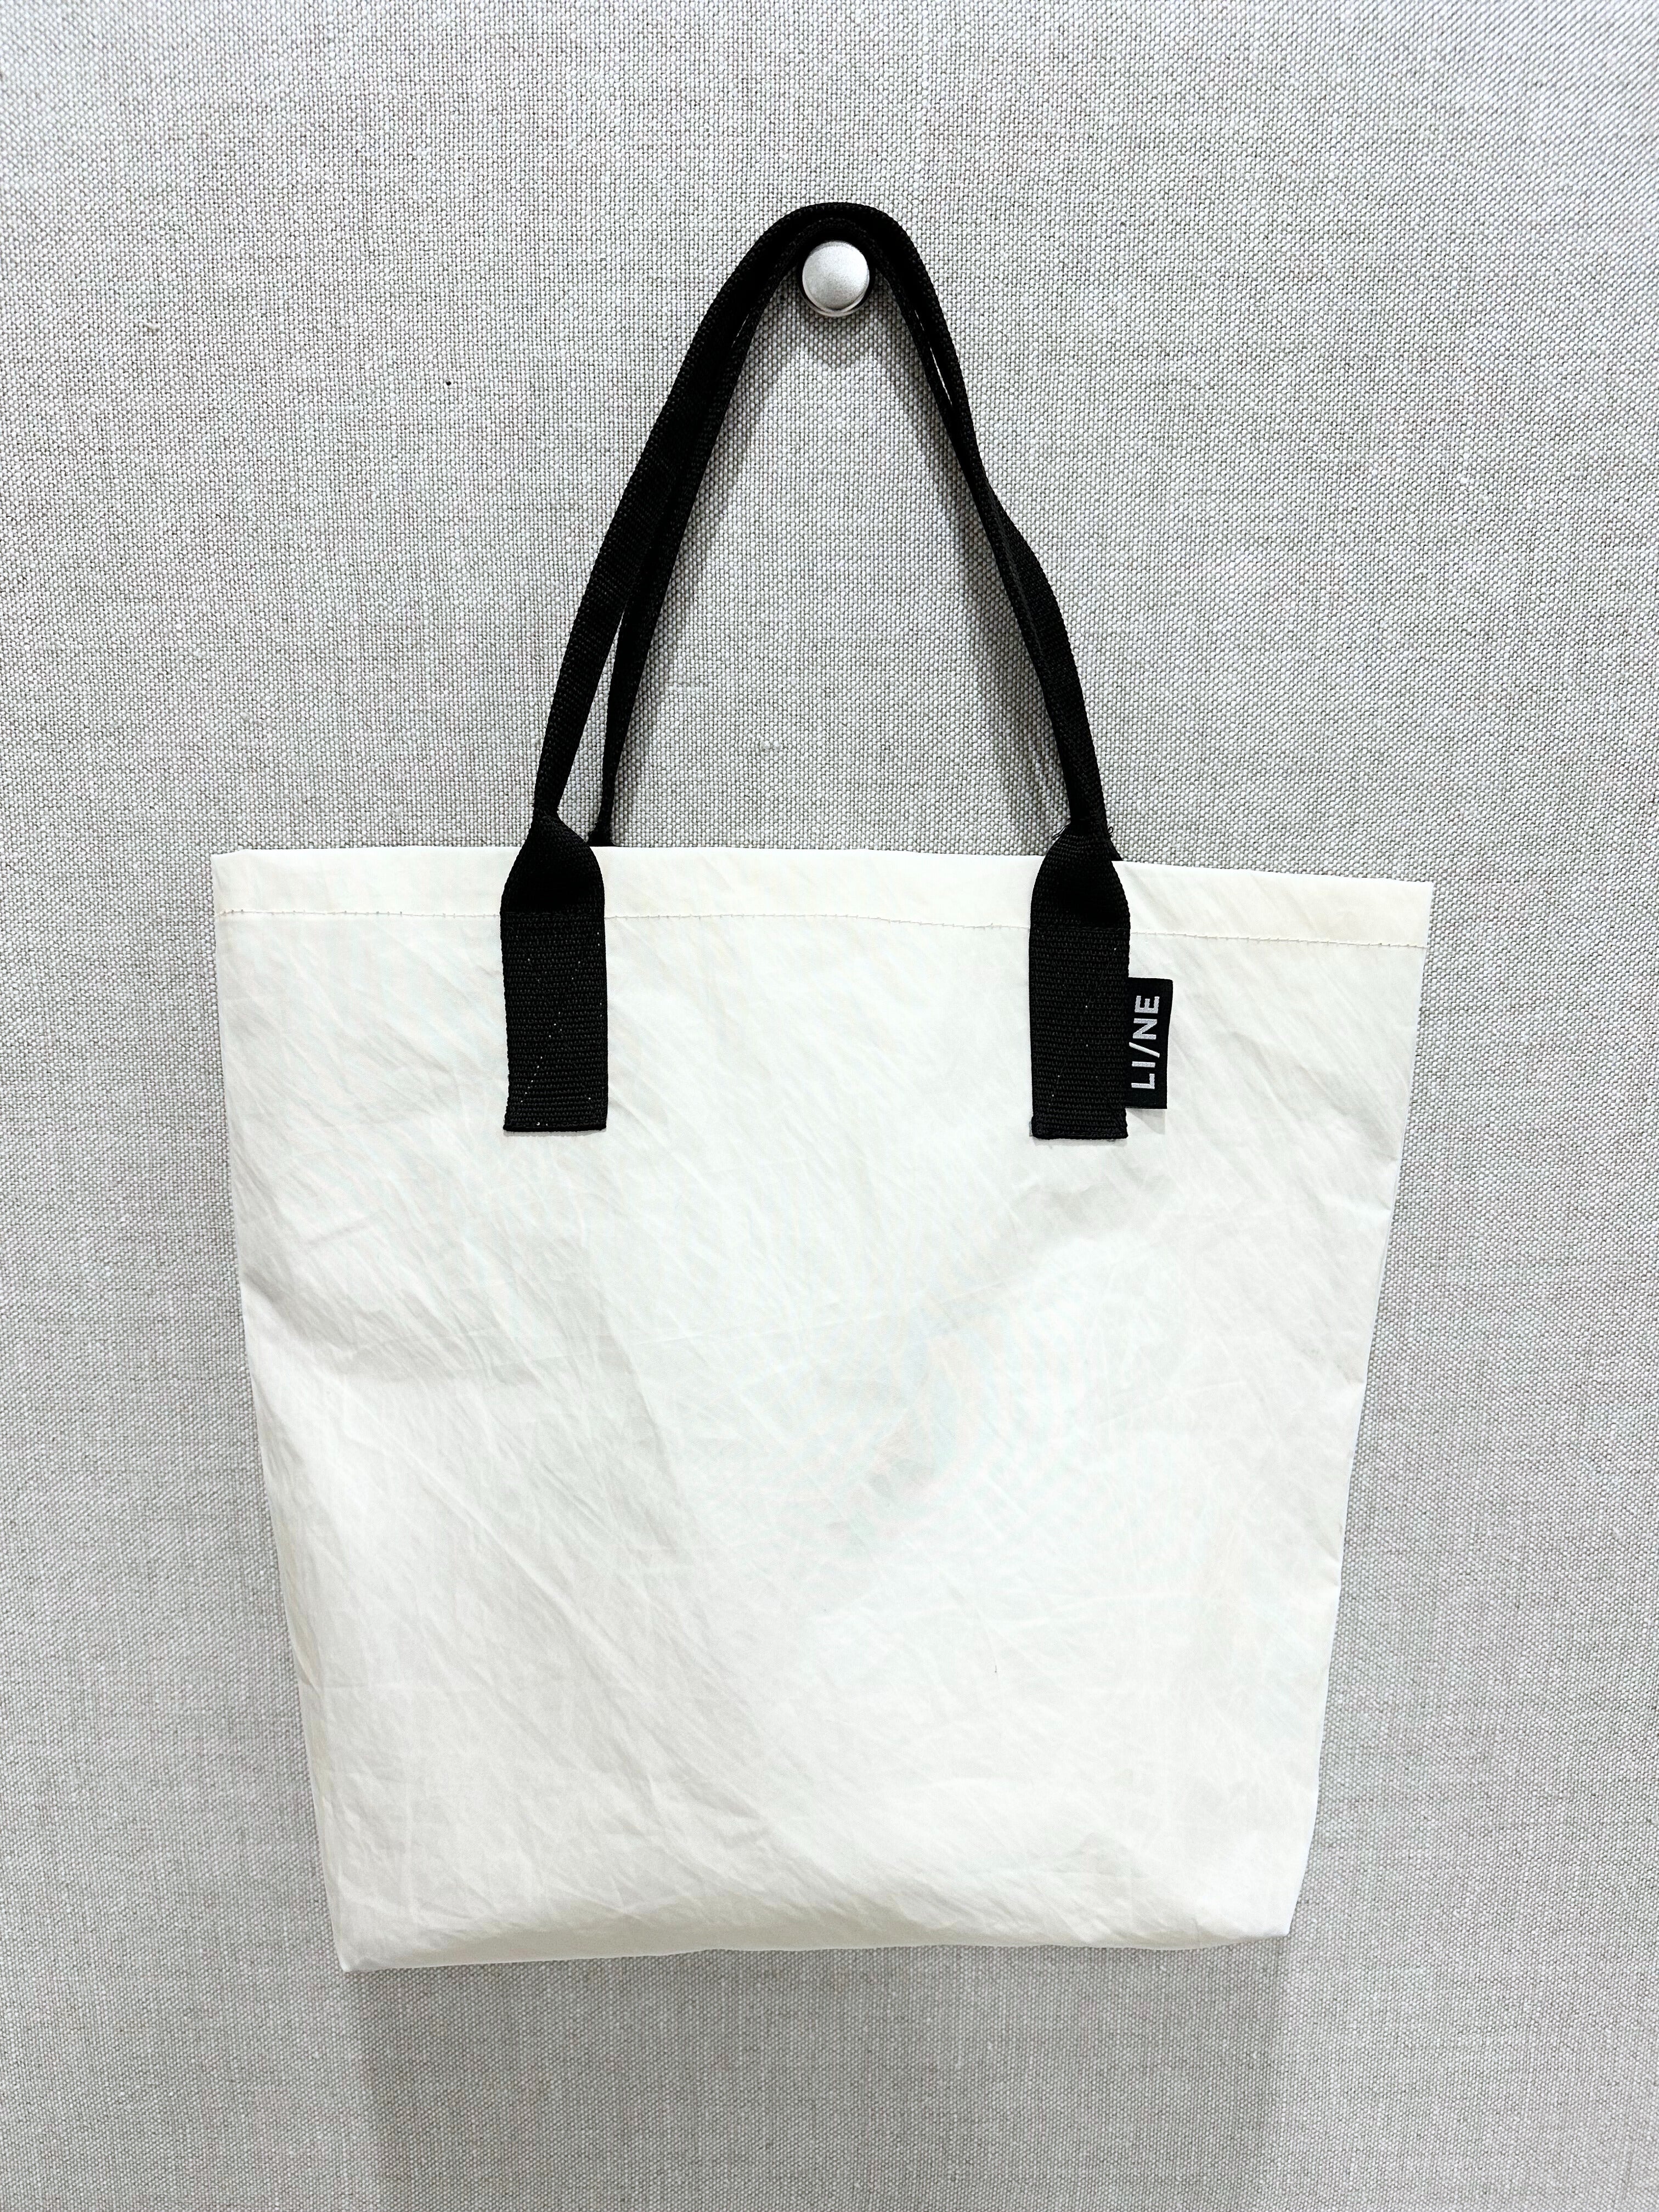 image for Upcycled Sail Tote Bag 0015